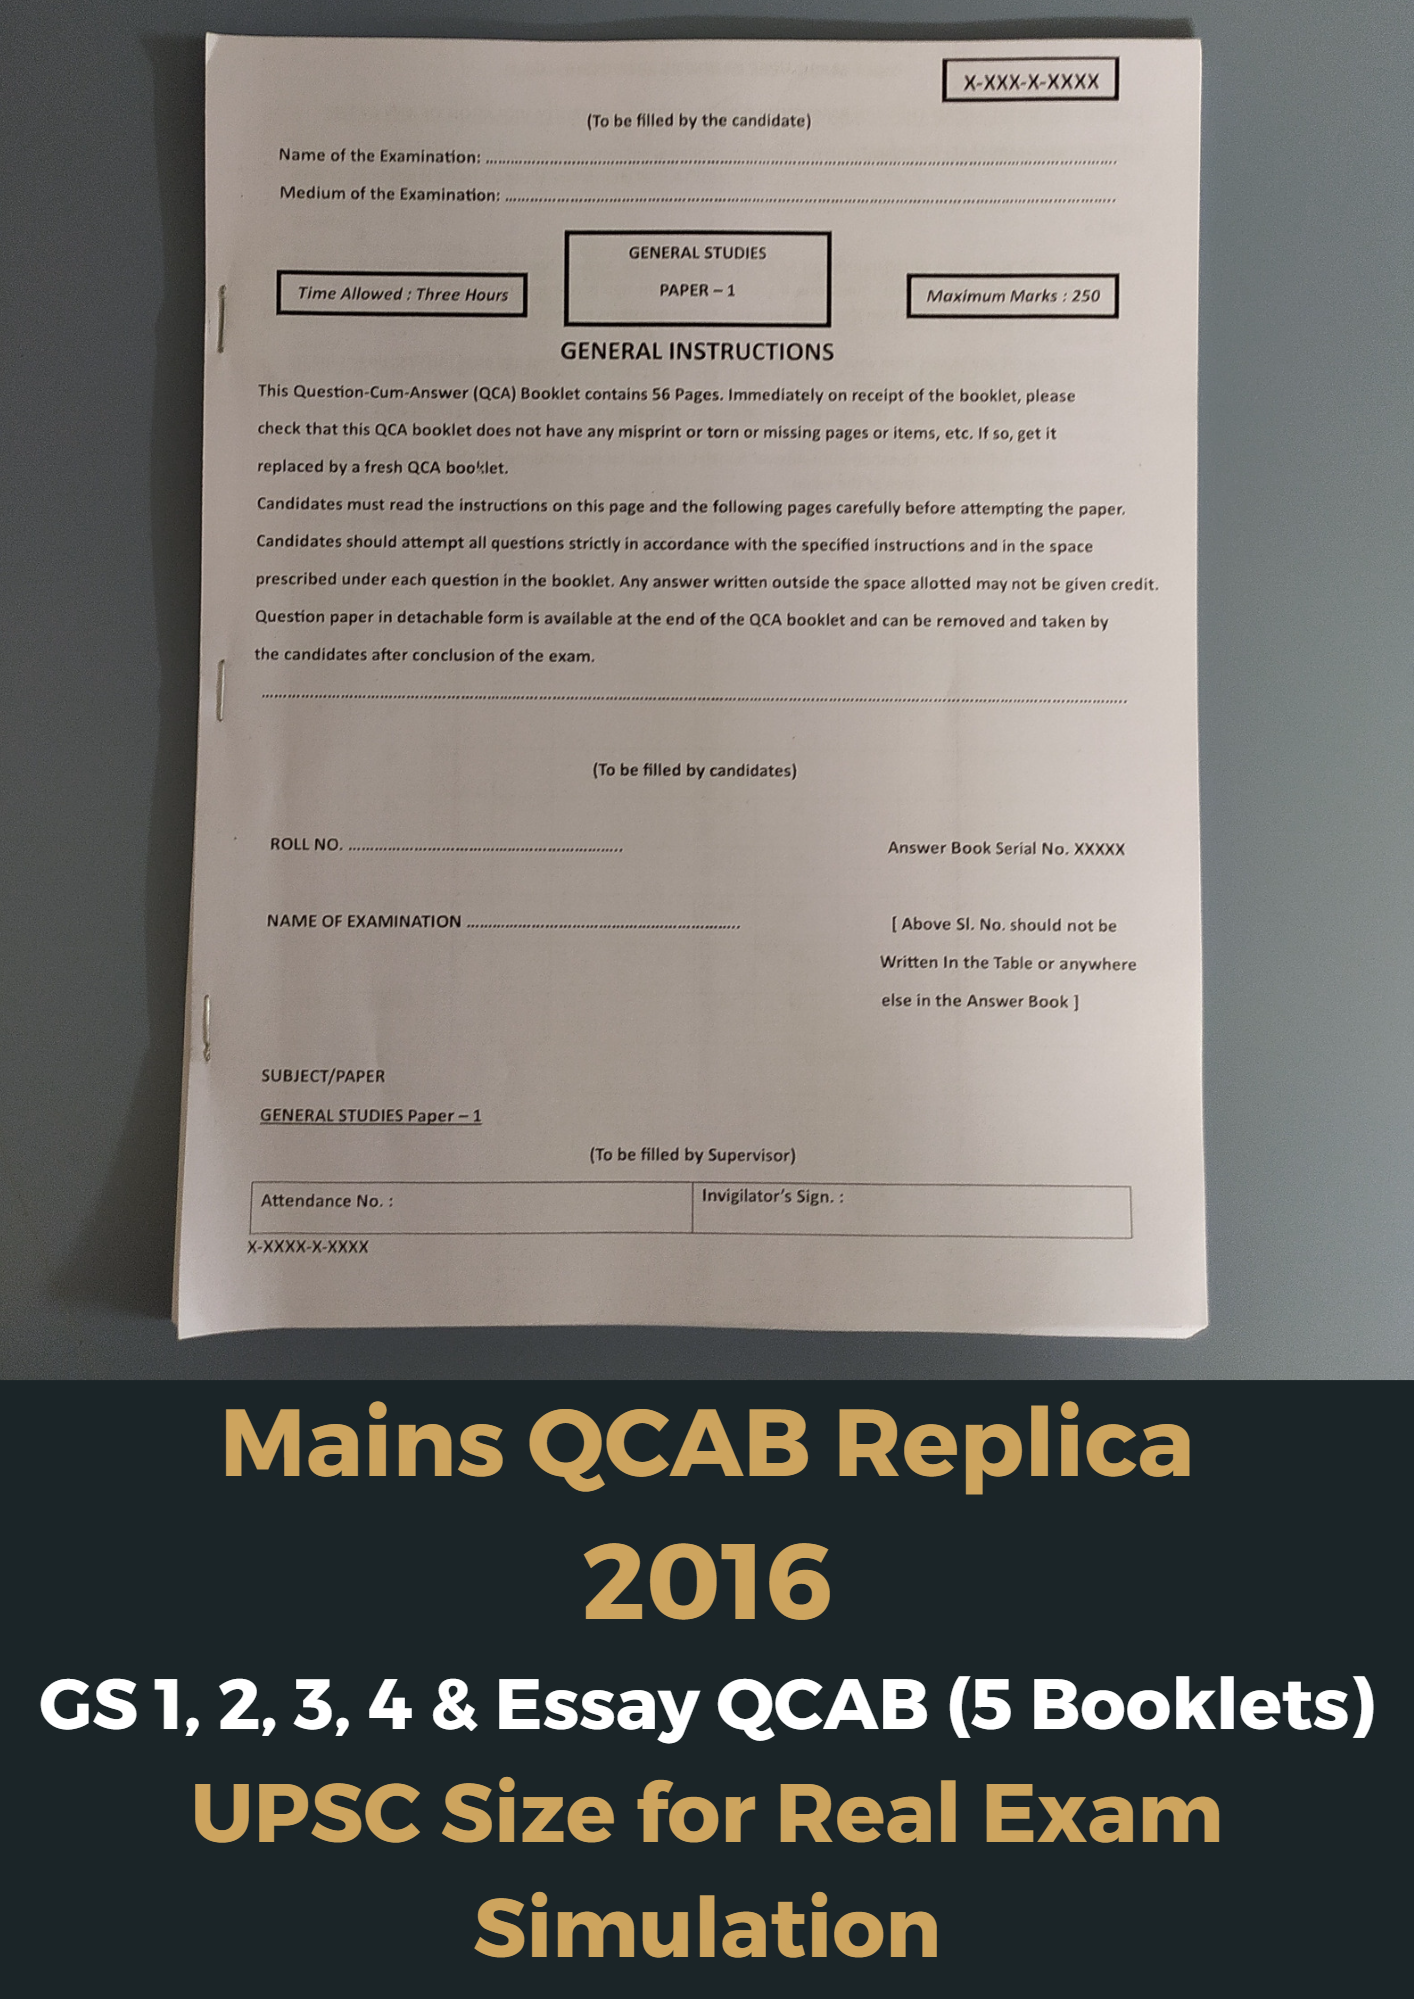 2016 Mains QCAB Replica - GS 1,2,3,4 & Essay (5 Booklets) - UPSC QCAB Size - For Real Exam Simulation